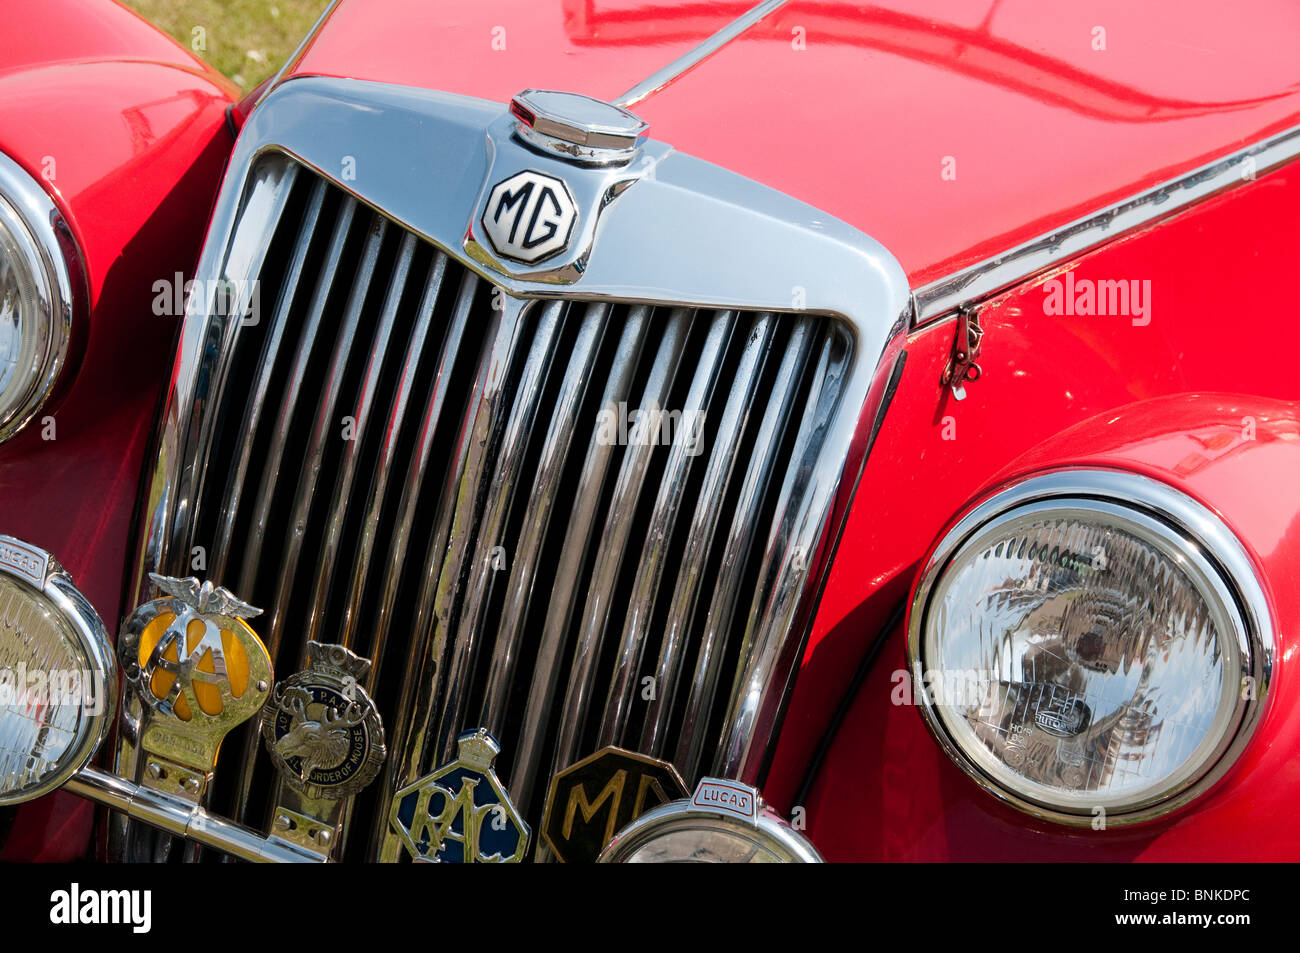 Rejilla del radiador de un coche deportivo MG rojo Foto de stock